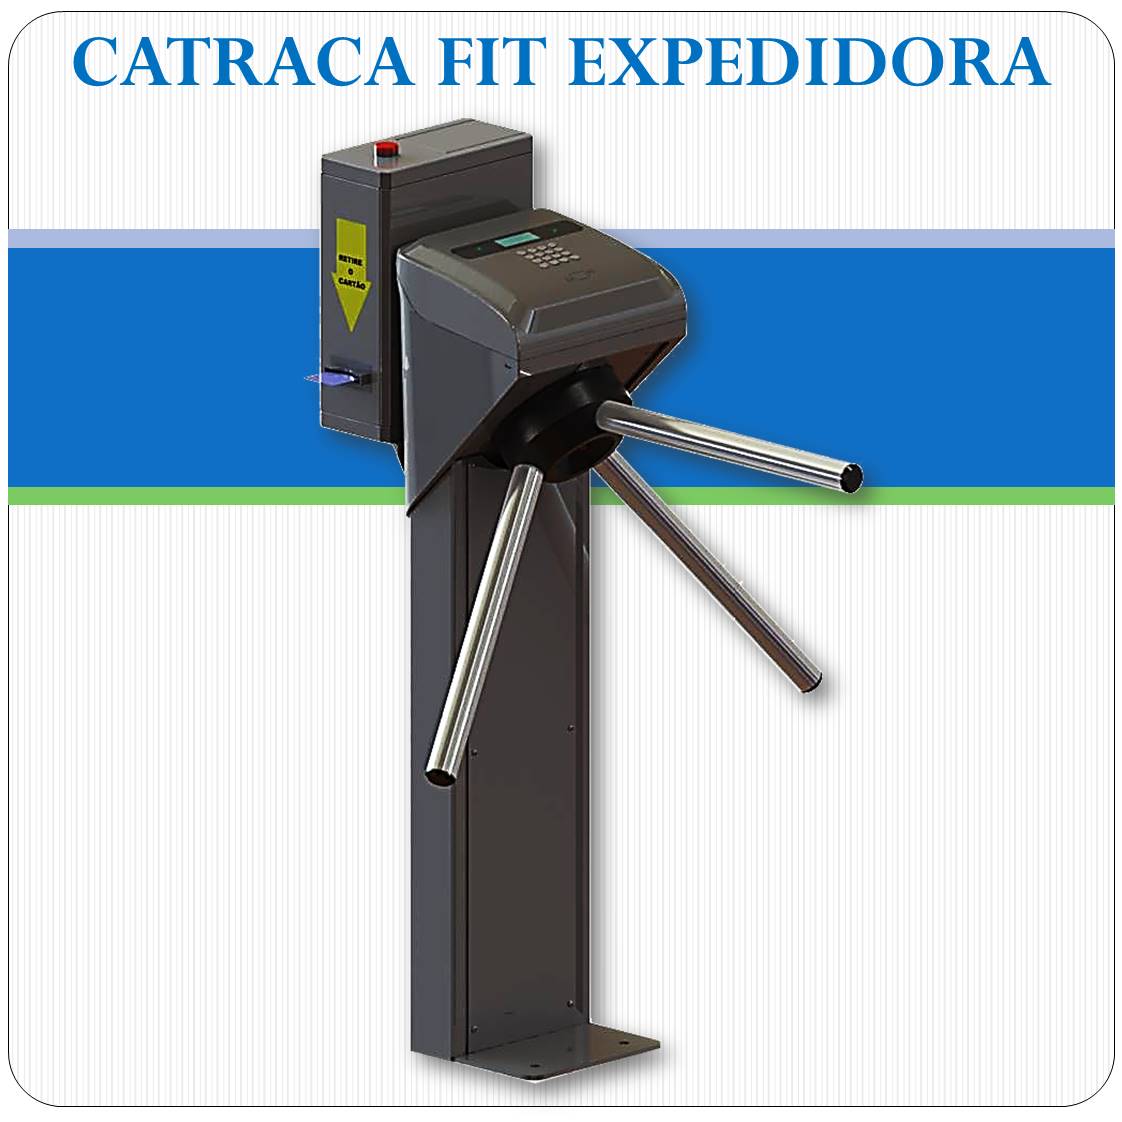 Catraca Expedidora de Comanda - Fit Expedidora